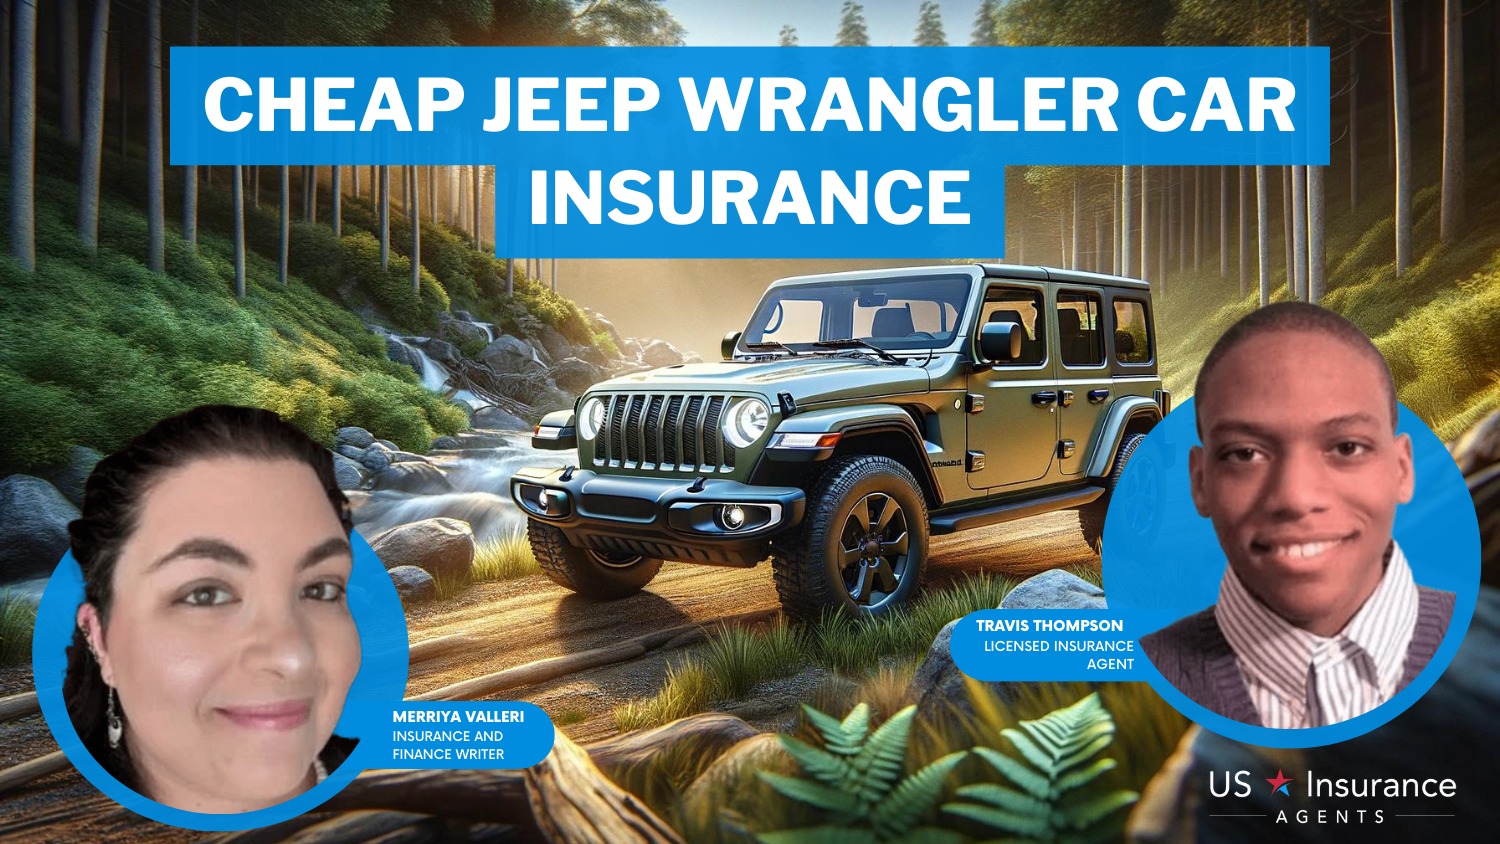 Cheap Jeep Wrangler Car Insurance: USAA, Farmers, and AAA